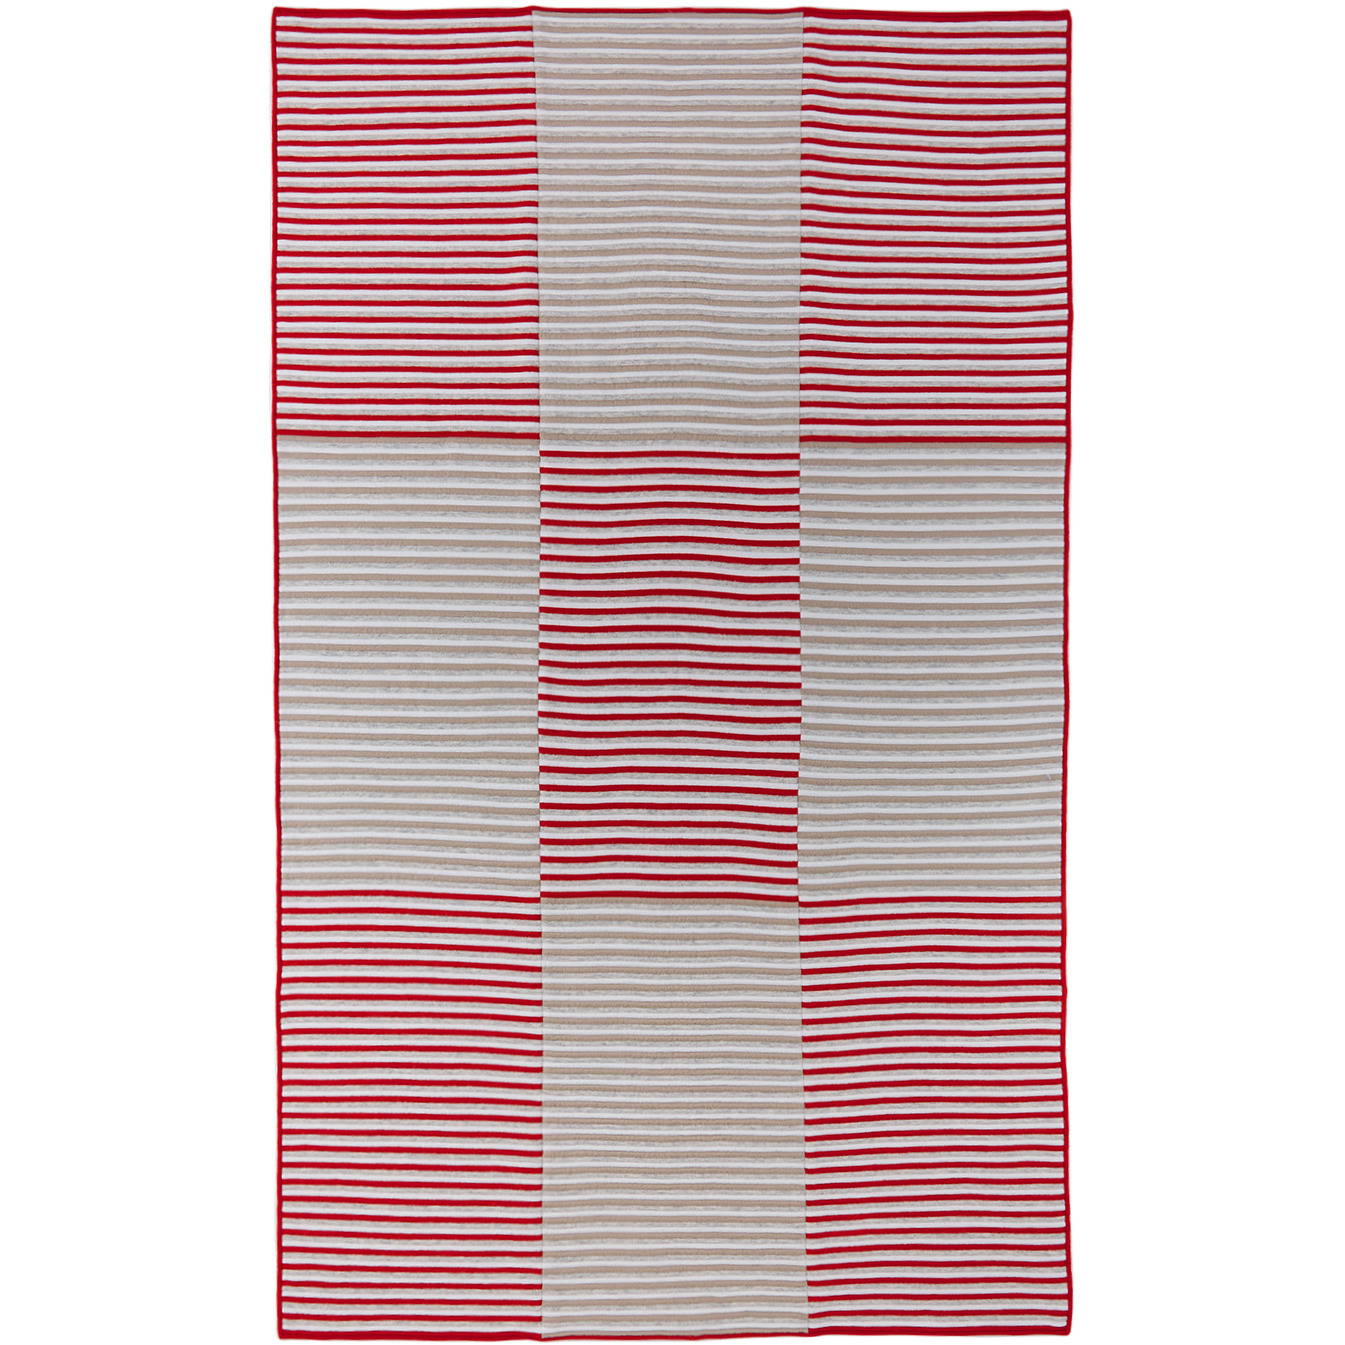 Saunders Red & Grey Bargo Blanket - image 1